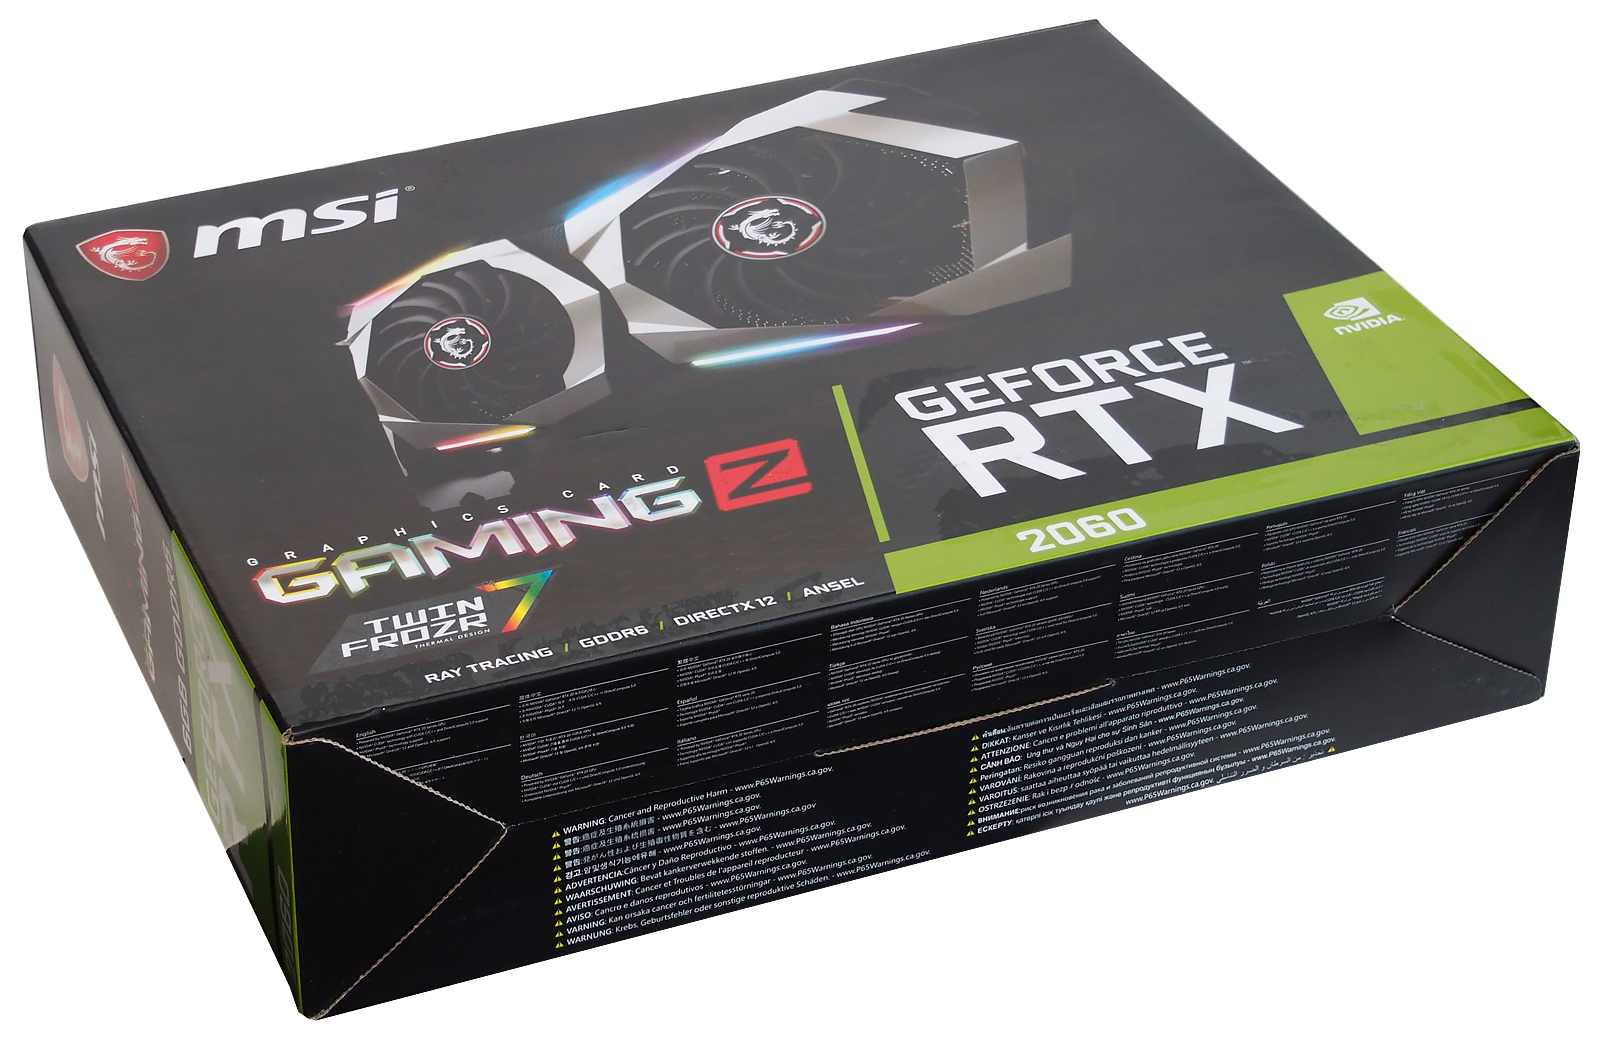 Geforce rtx 2060 gaming pro. GEFORCE RTX 2060 Gaming z 6g. RTX 2060 MSI Gaming z. Коробка от MSI RTX 2060. Видеокарта РТХ 2060 МСИ упаковка.